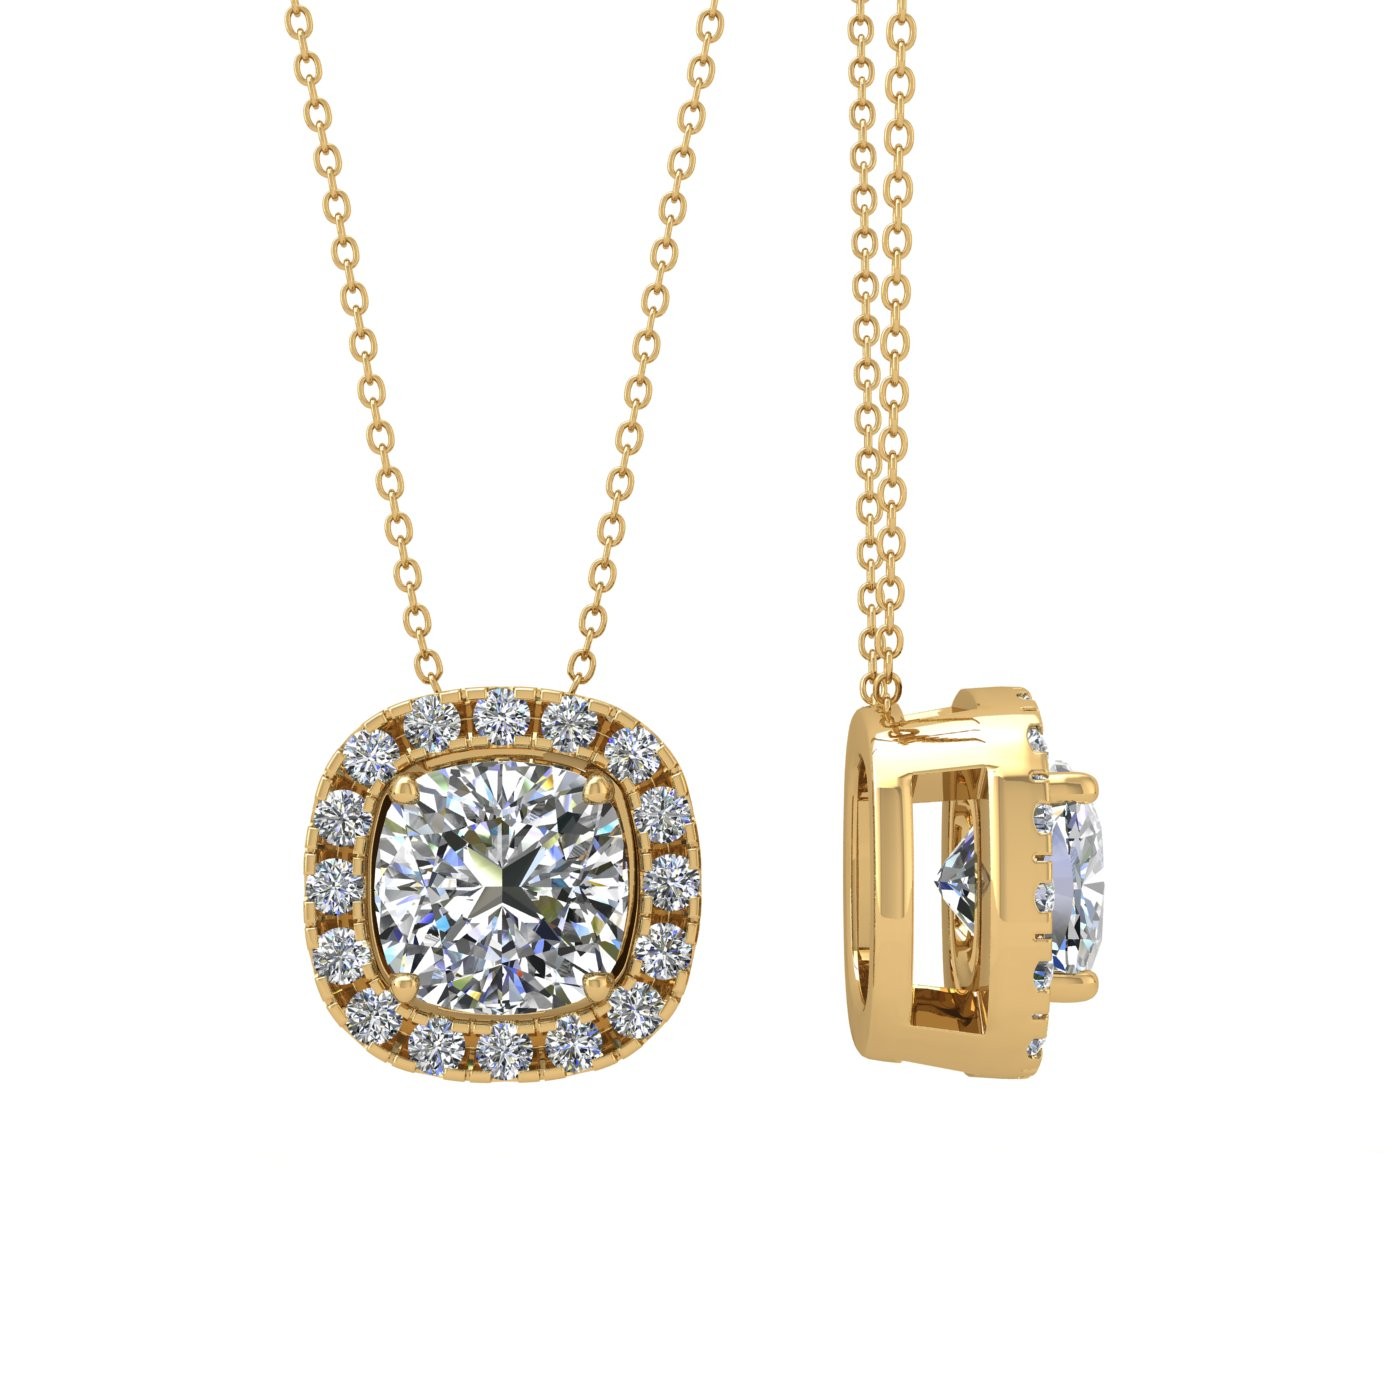 18k white gold  1,2 ct 4 prongs cushion shape diamond pendant with diamond pavÉ set halo Photos & images